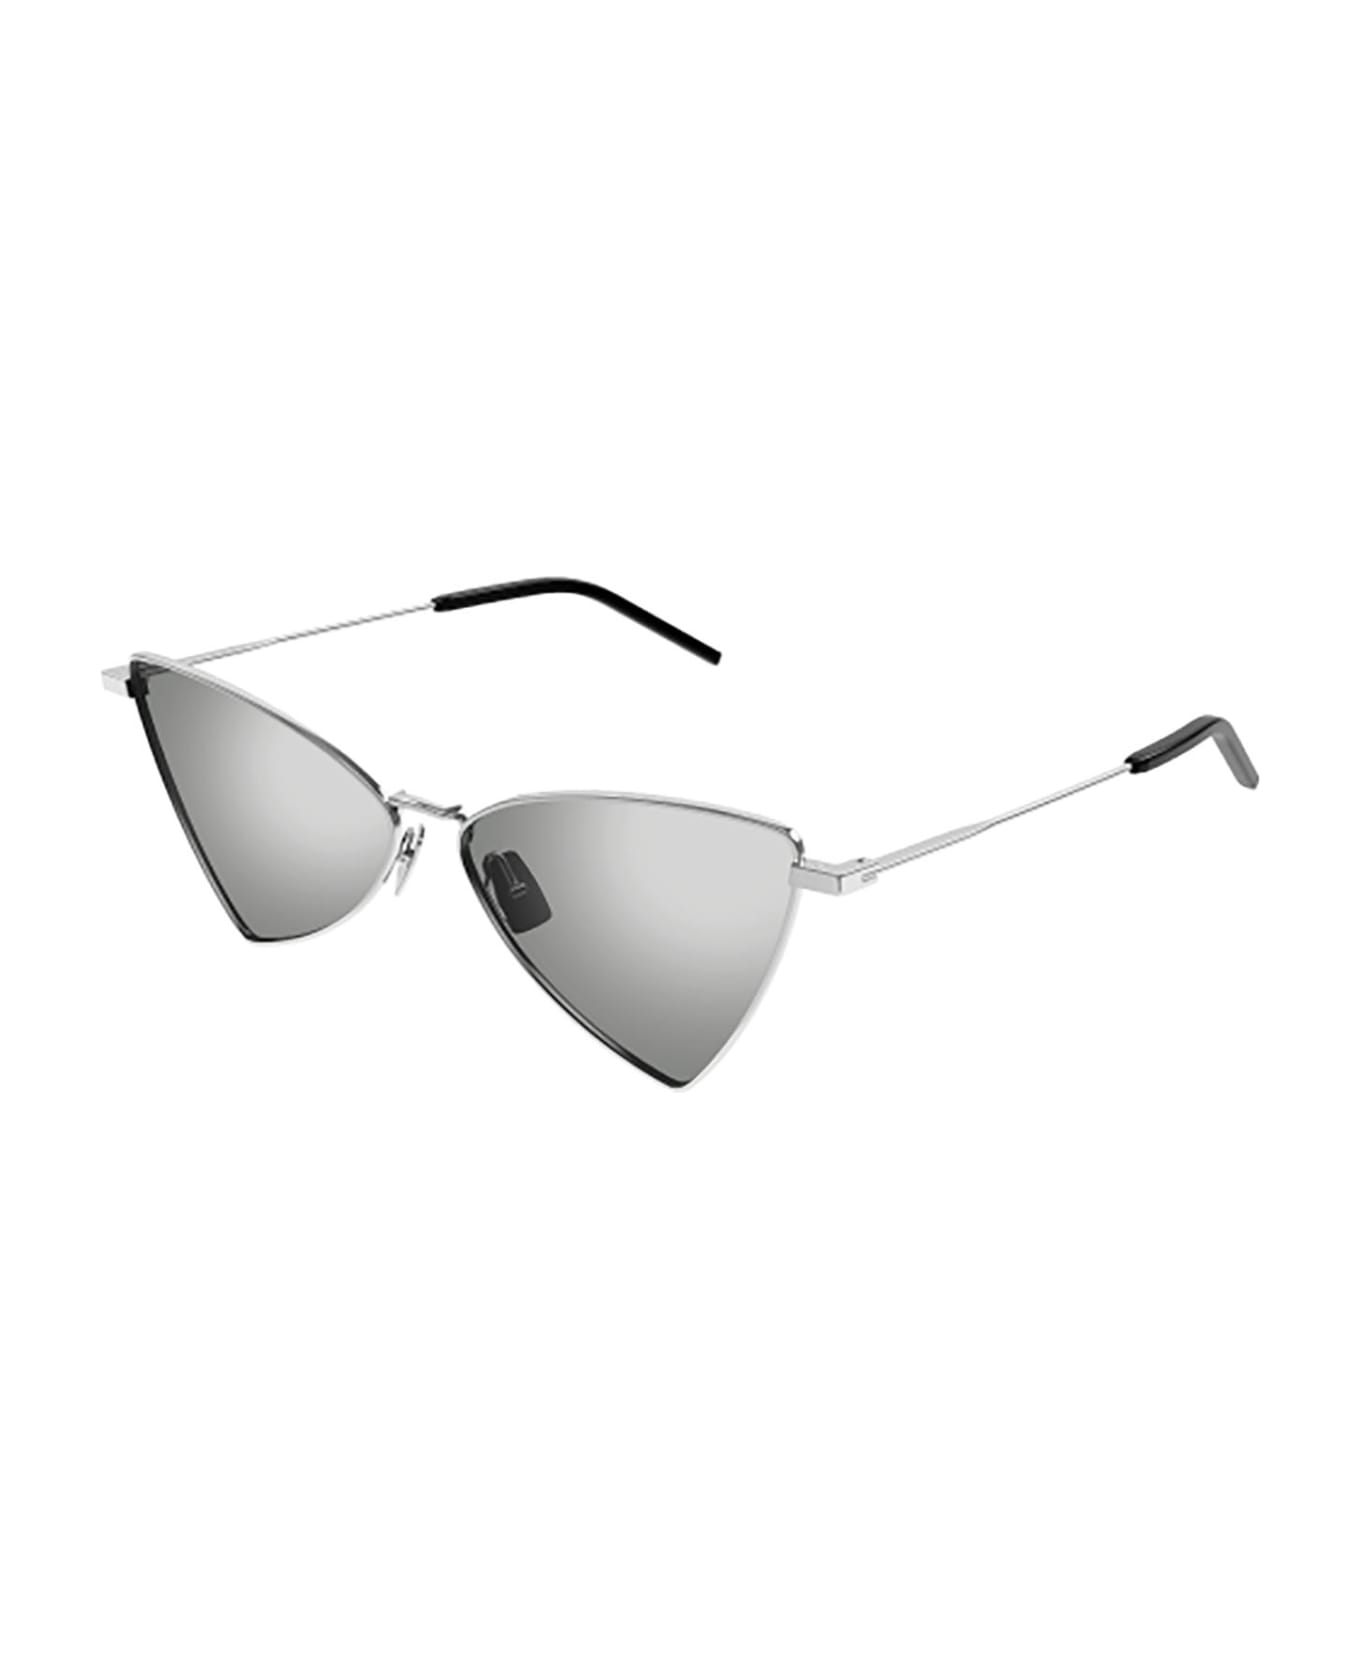 Saint Laurent Eyewear Sl 303 Jerry Sunglasses - 010 silver silver silver サングラス